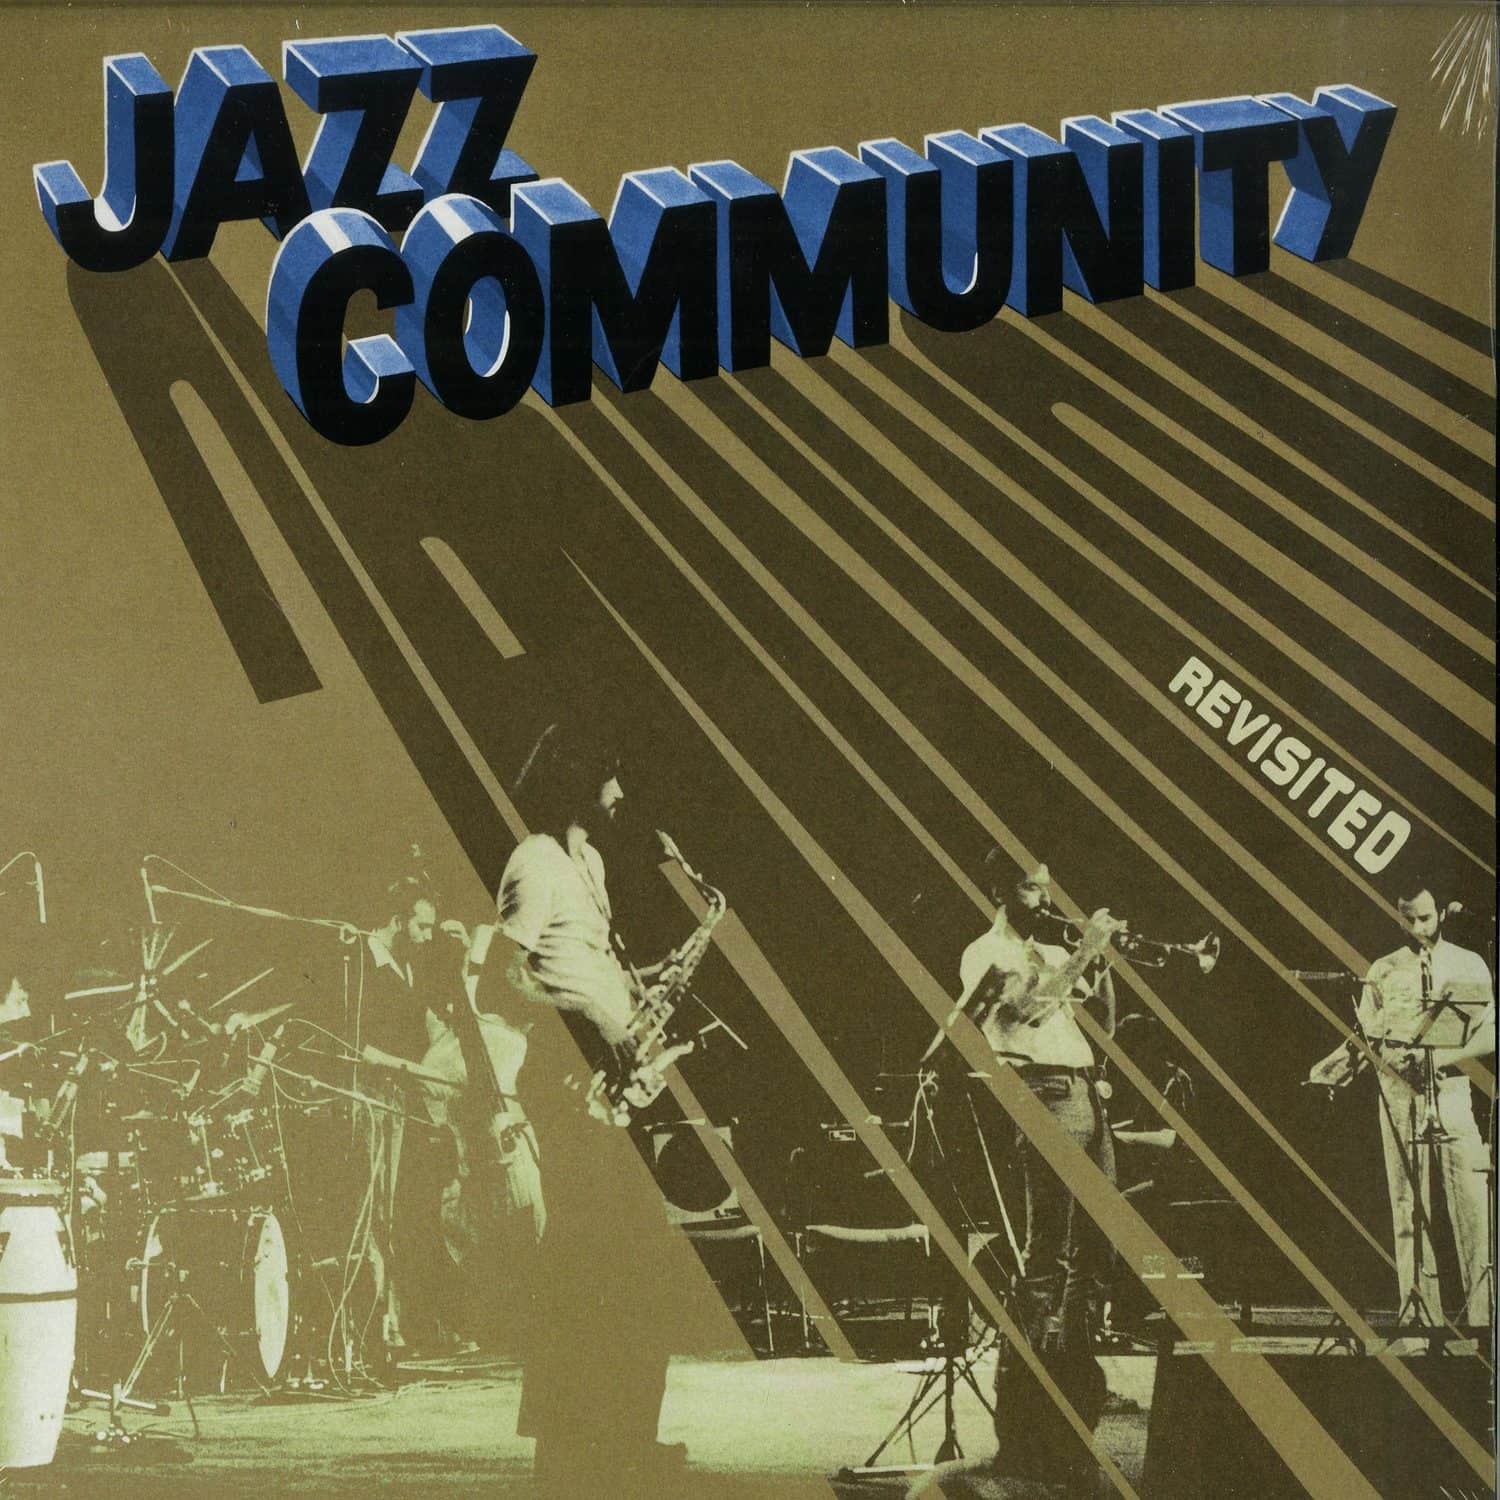 Jazz Community - REVISITED 